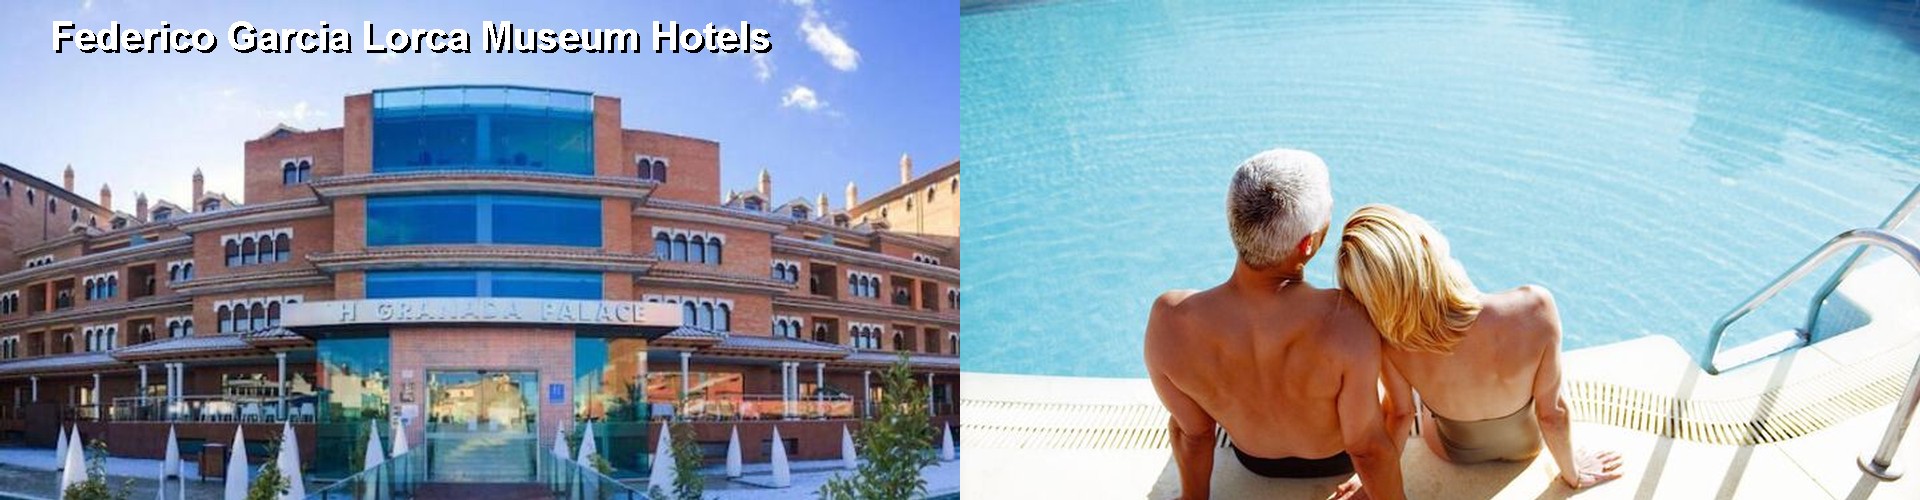 5 Best Hotels near Federico Garcia Lorca Museum